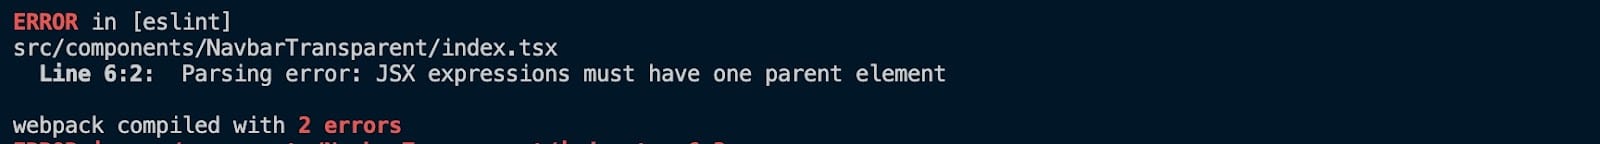 JSX expressions must have one parent element error message